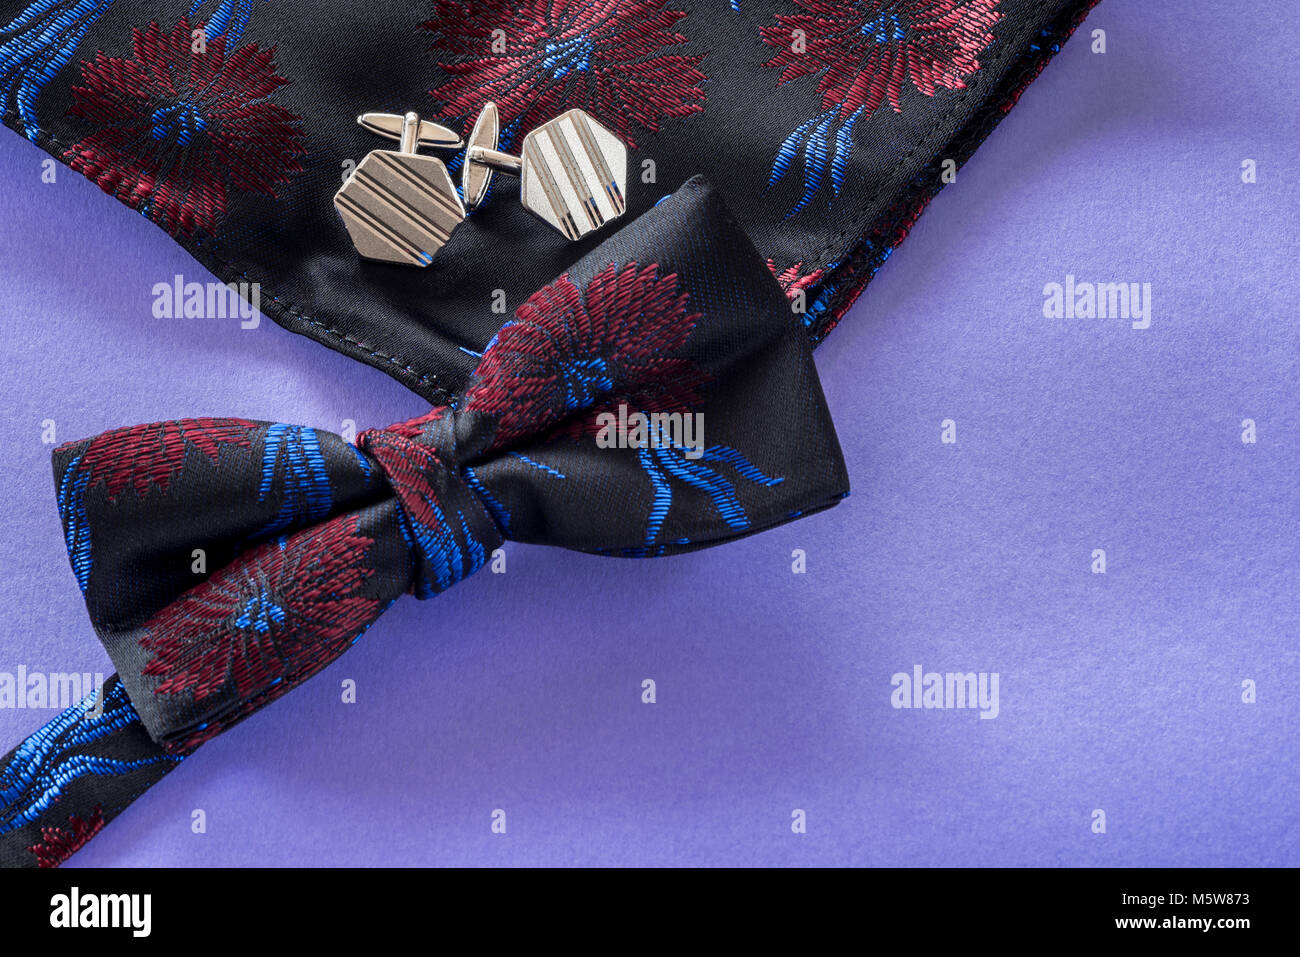 Bow tie silver cufflinks and handkerchief. Stock Photo